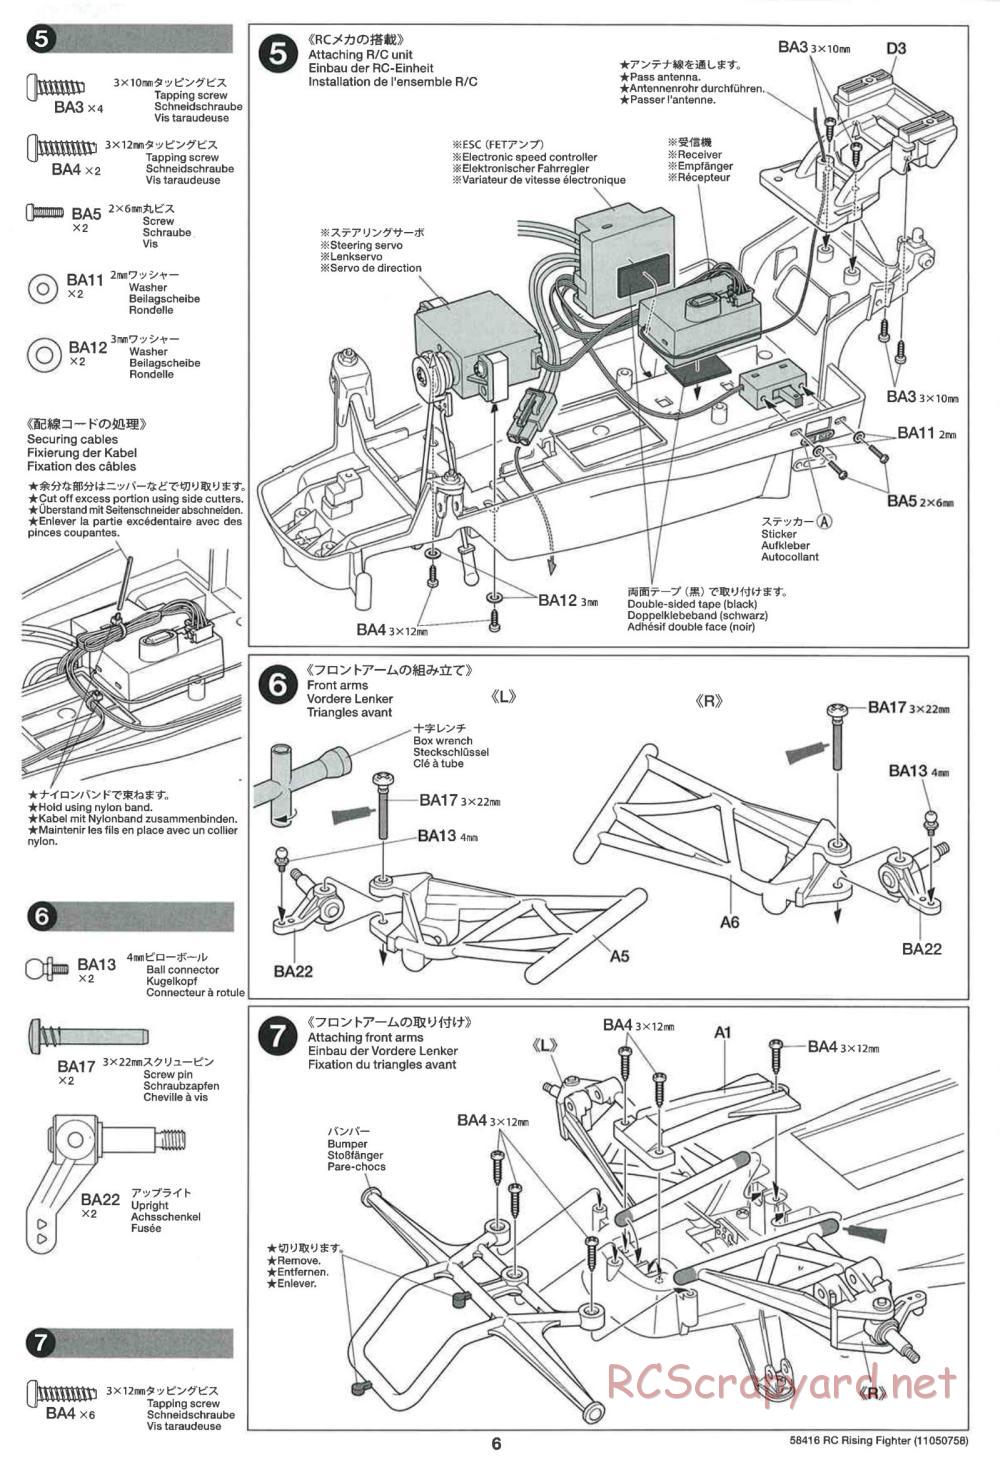 Tamiya - Rising Fighter Chassis - Manual - Page 6